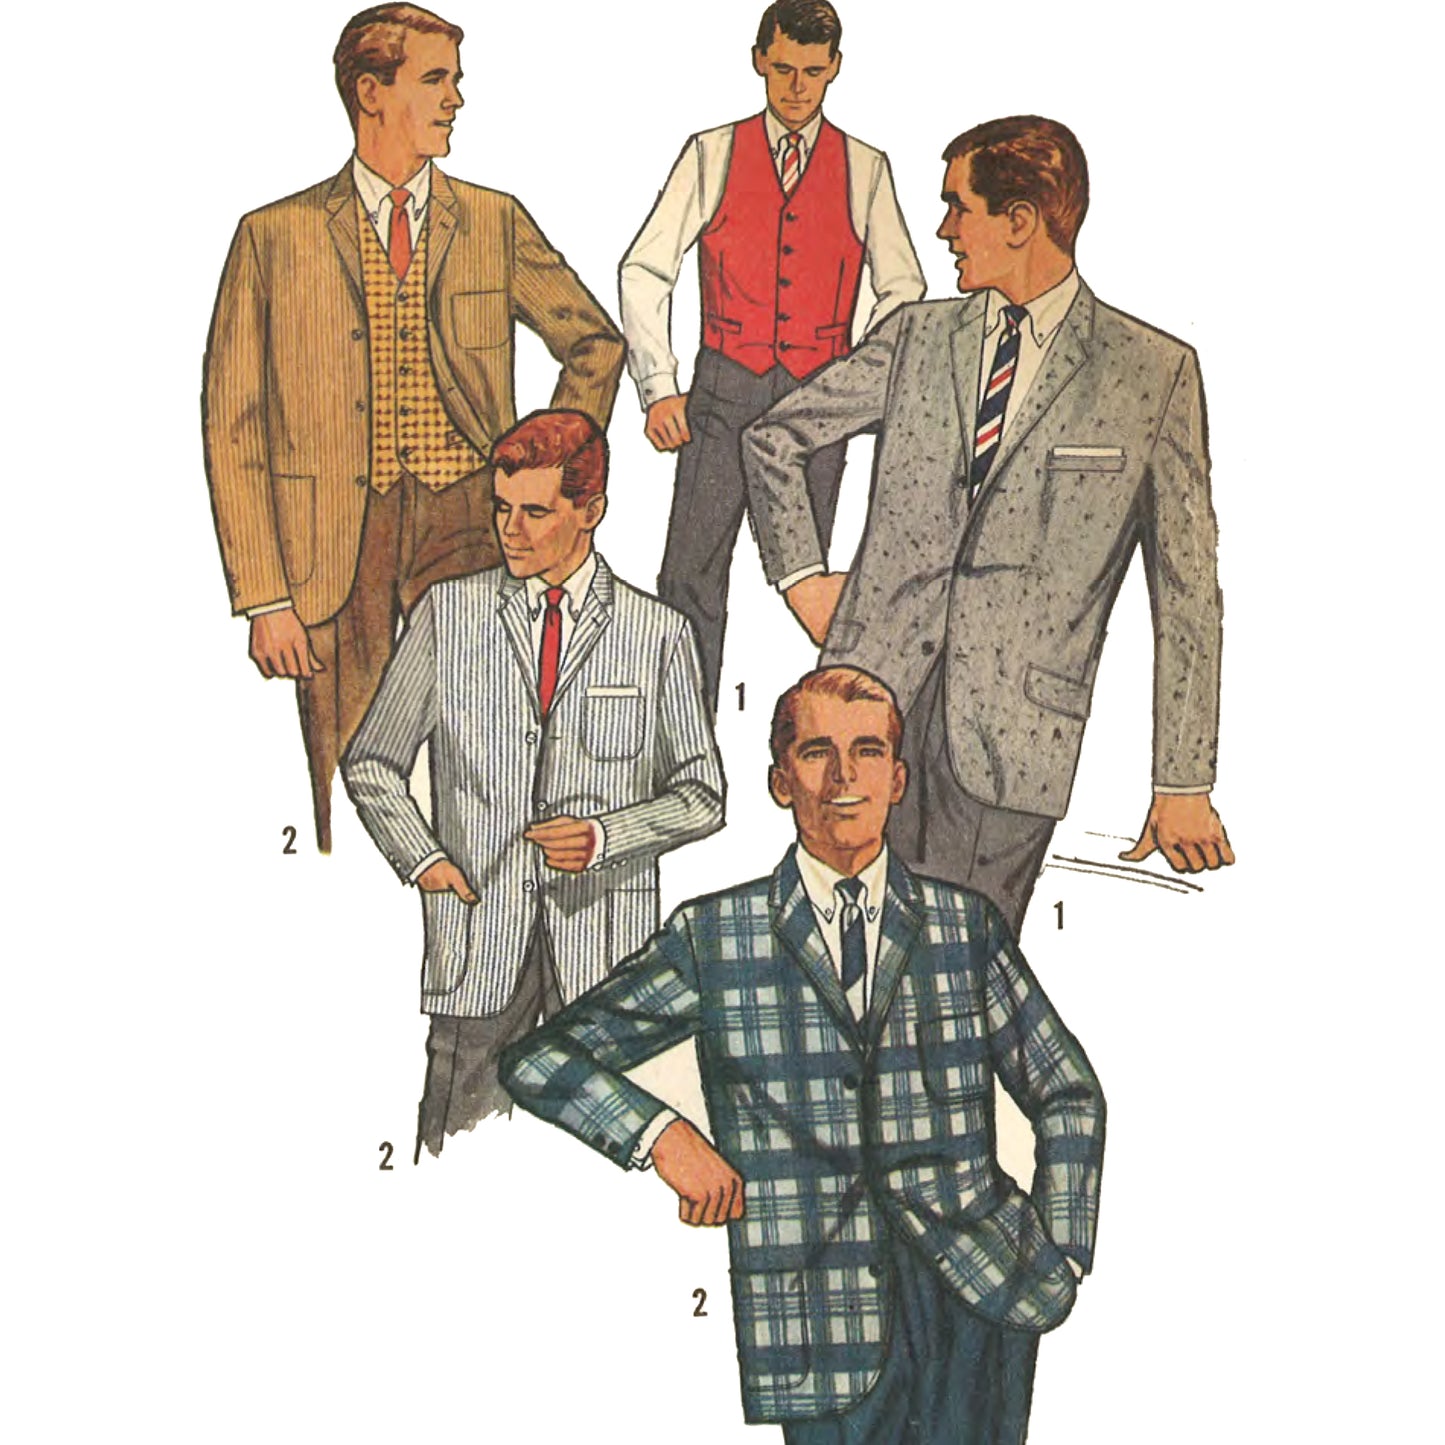  Men wearing jackets and waistcoats